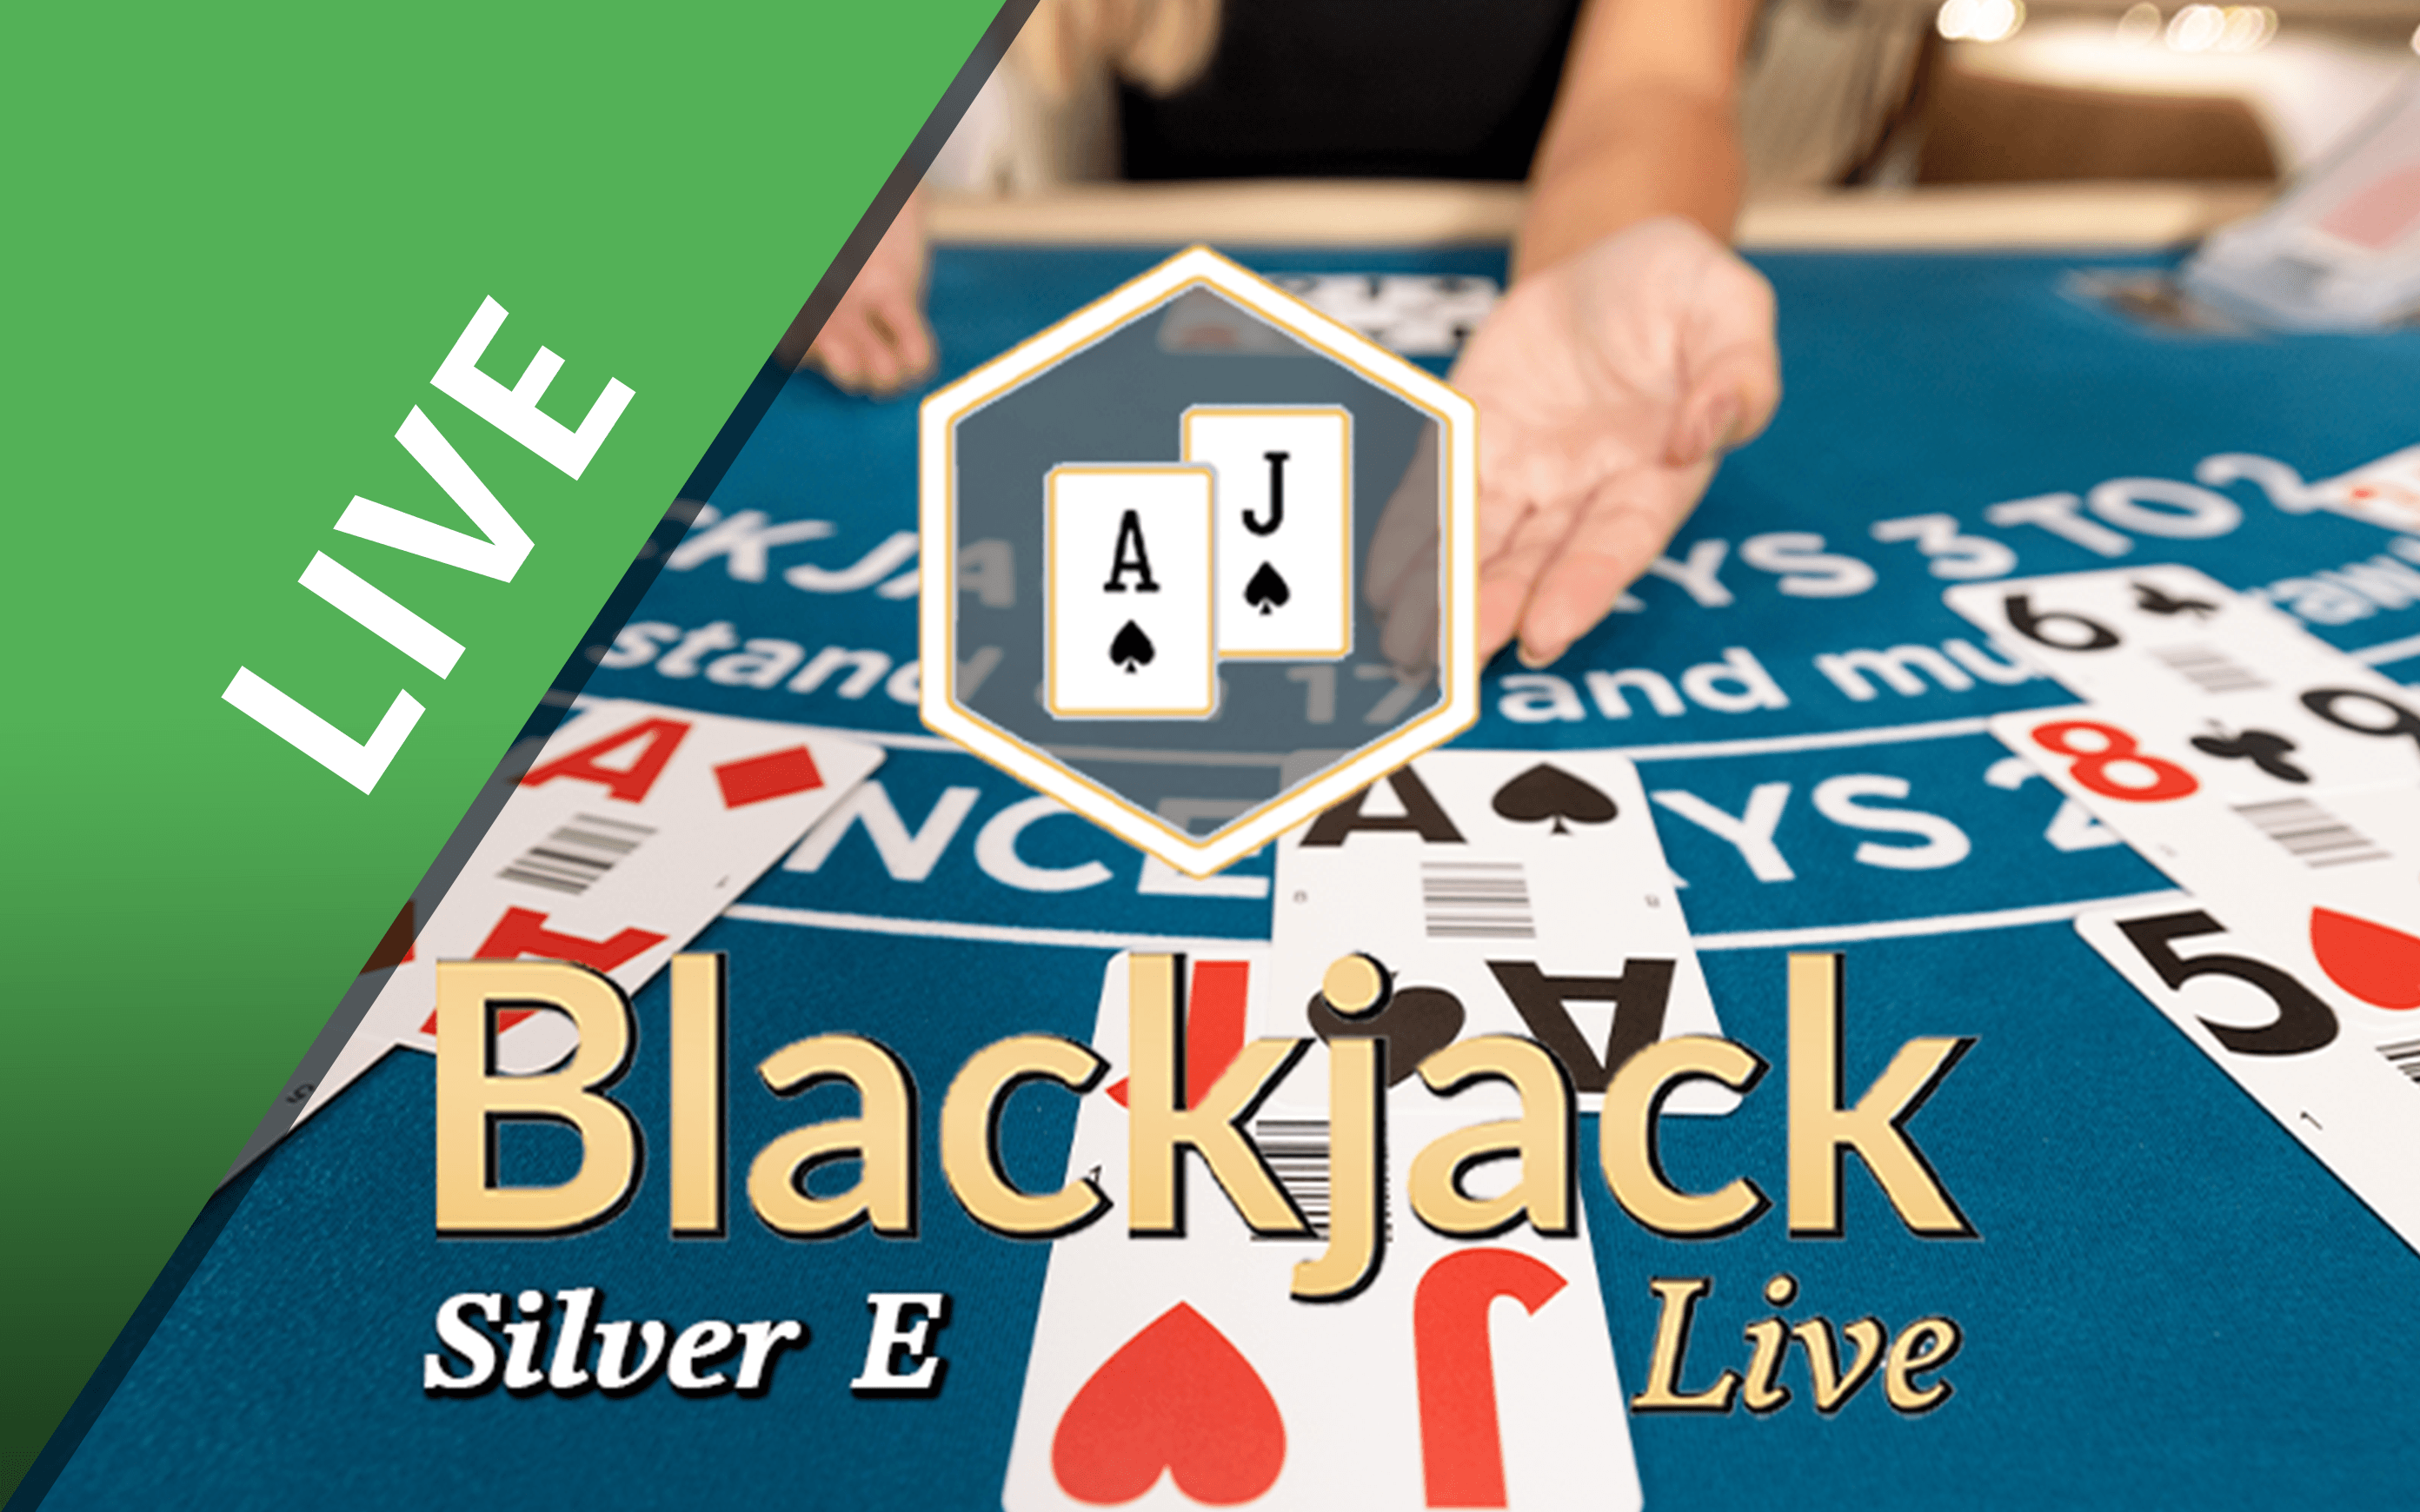 Play Blackjack Silver E on Starcasino.be online casino